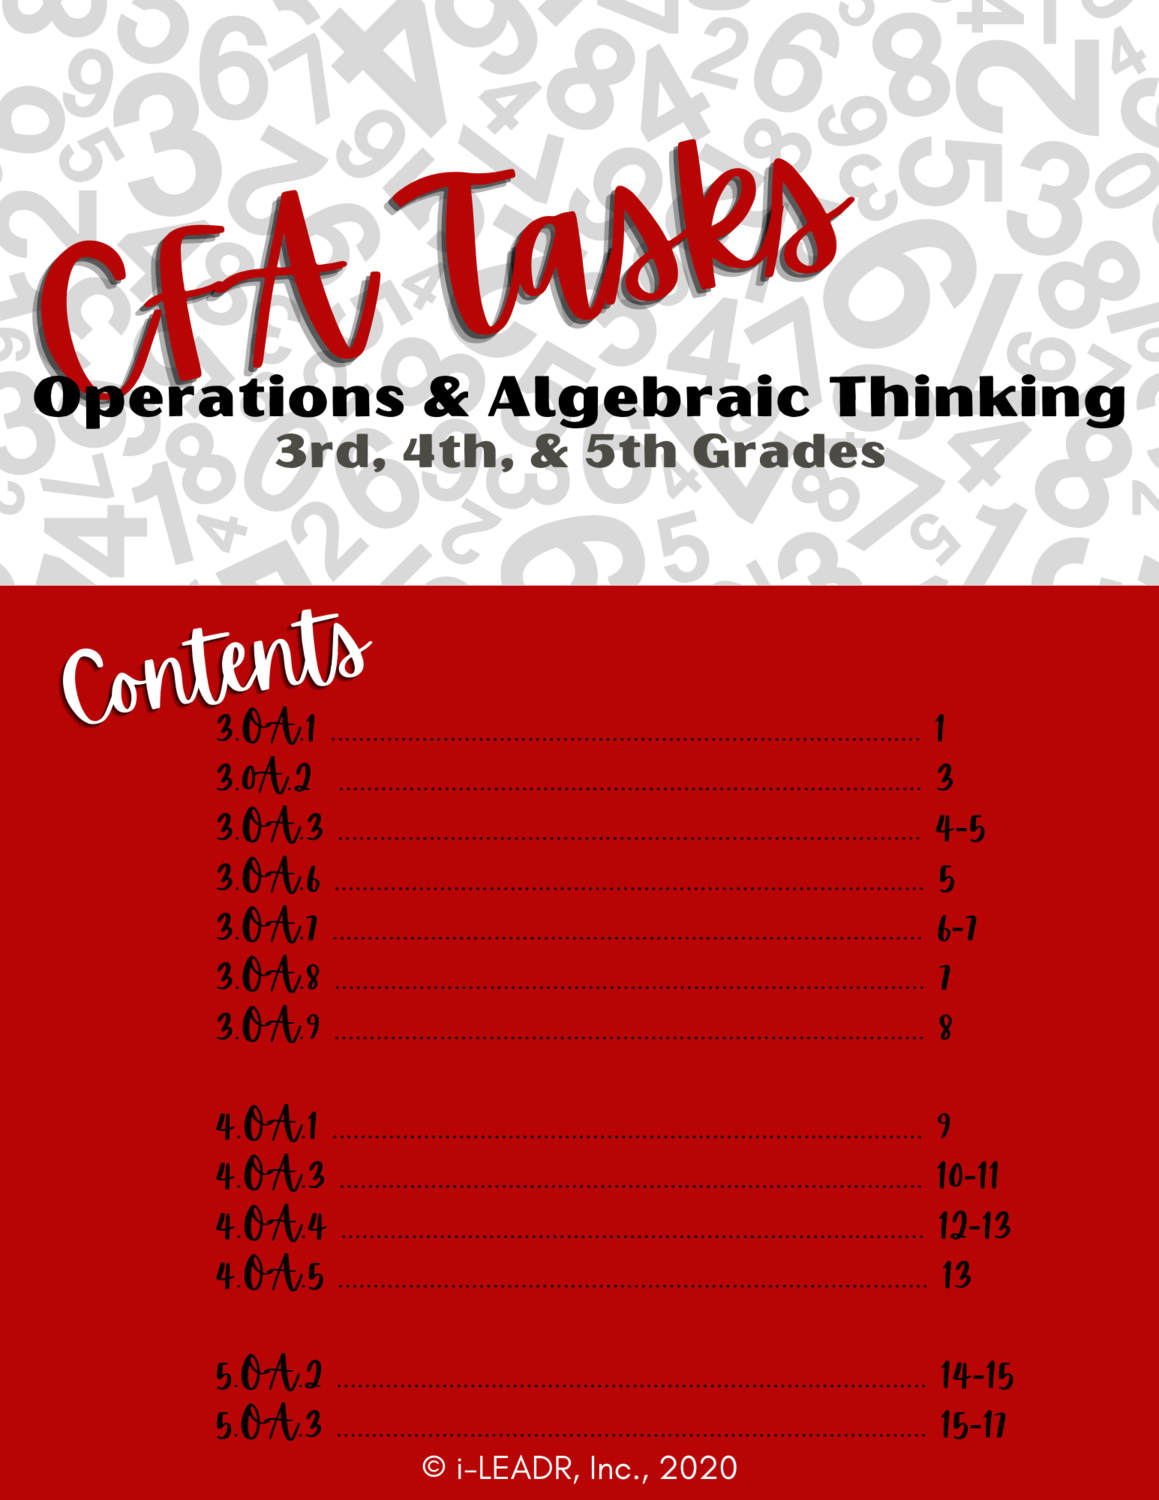 Operations and Algebraic Thinking CFAs/Tasks (Grades 3-5)